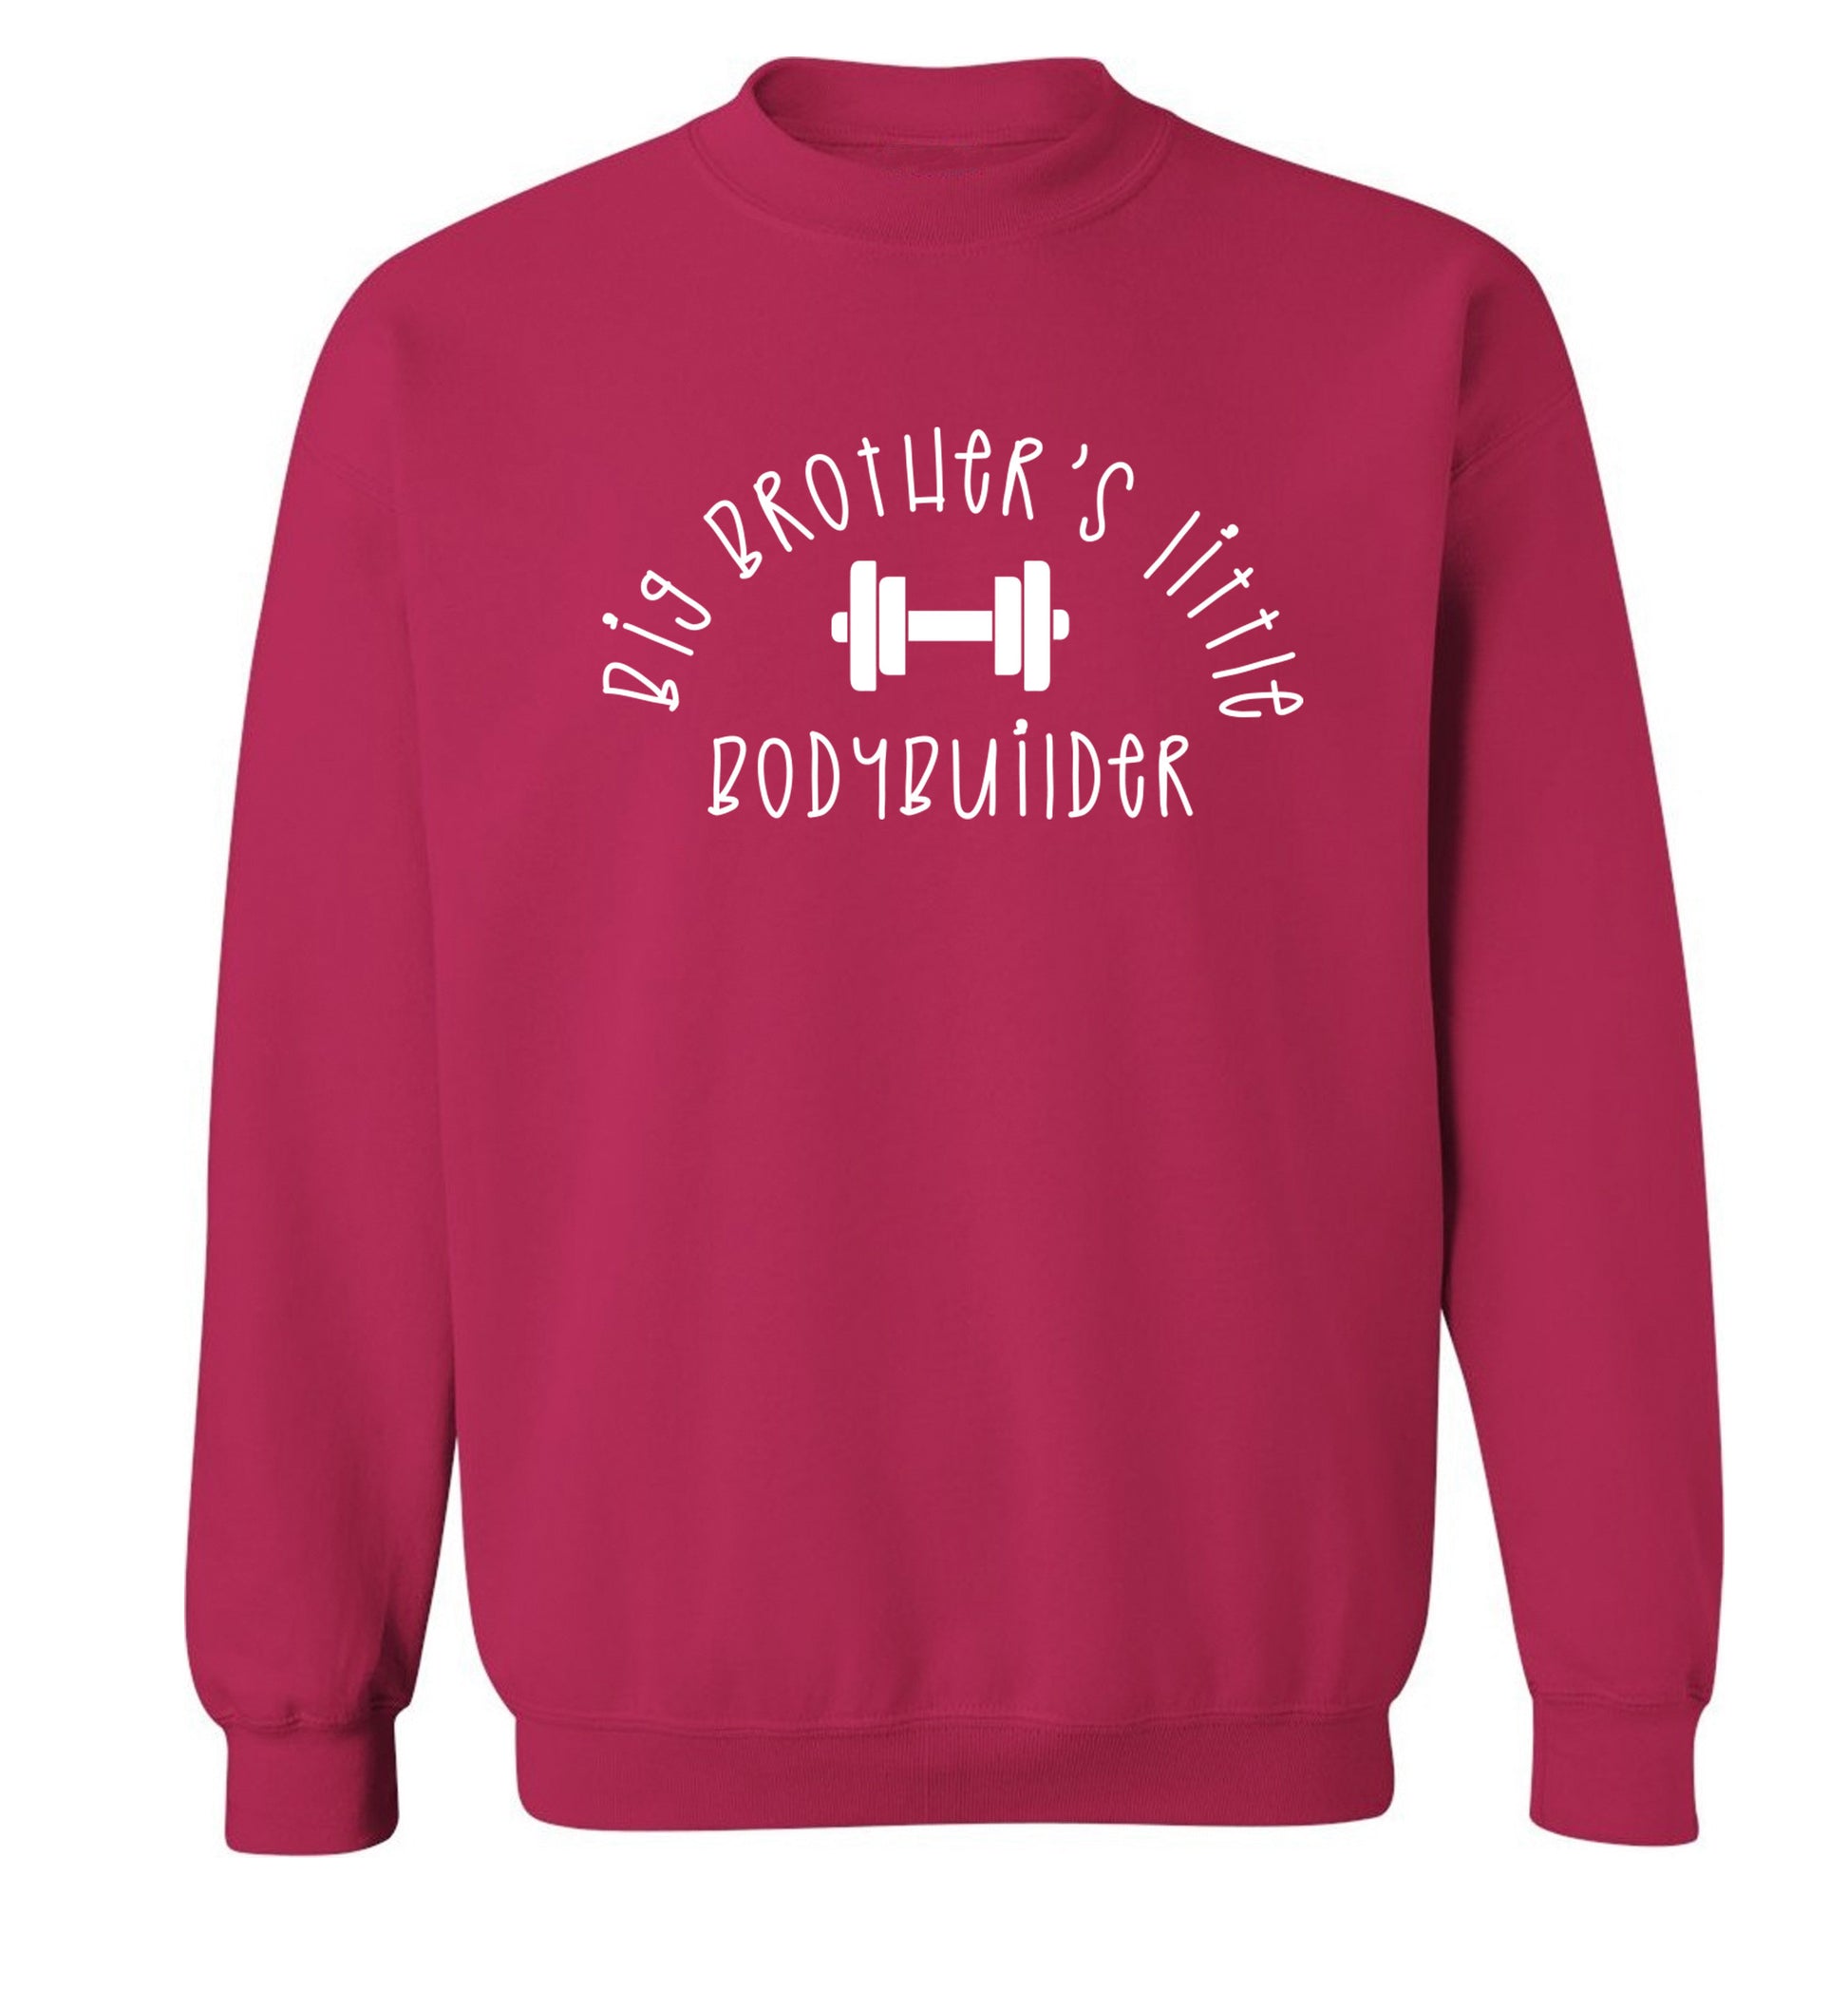 Big brother's little bodybuilder Adult's unisex pink Sweater 2XL